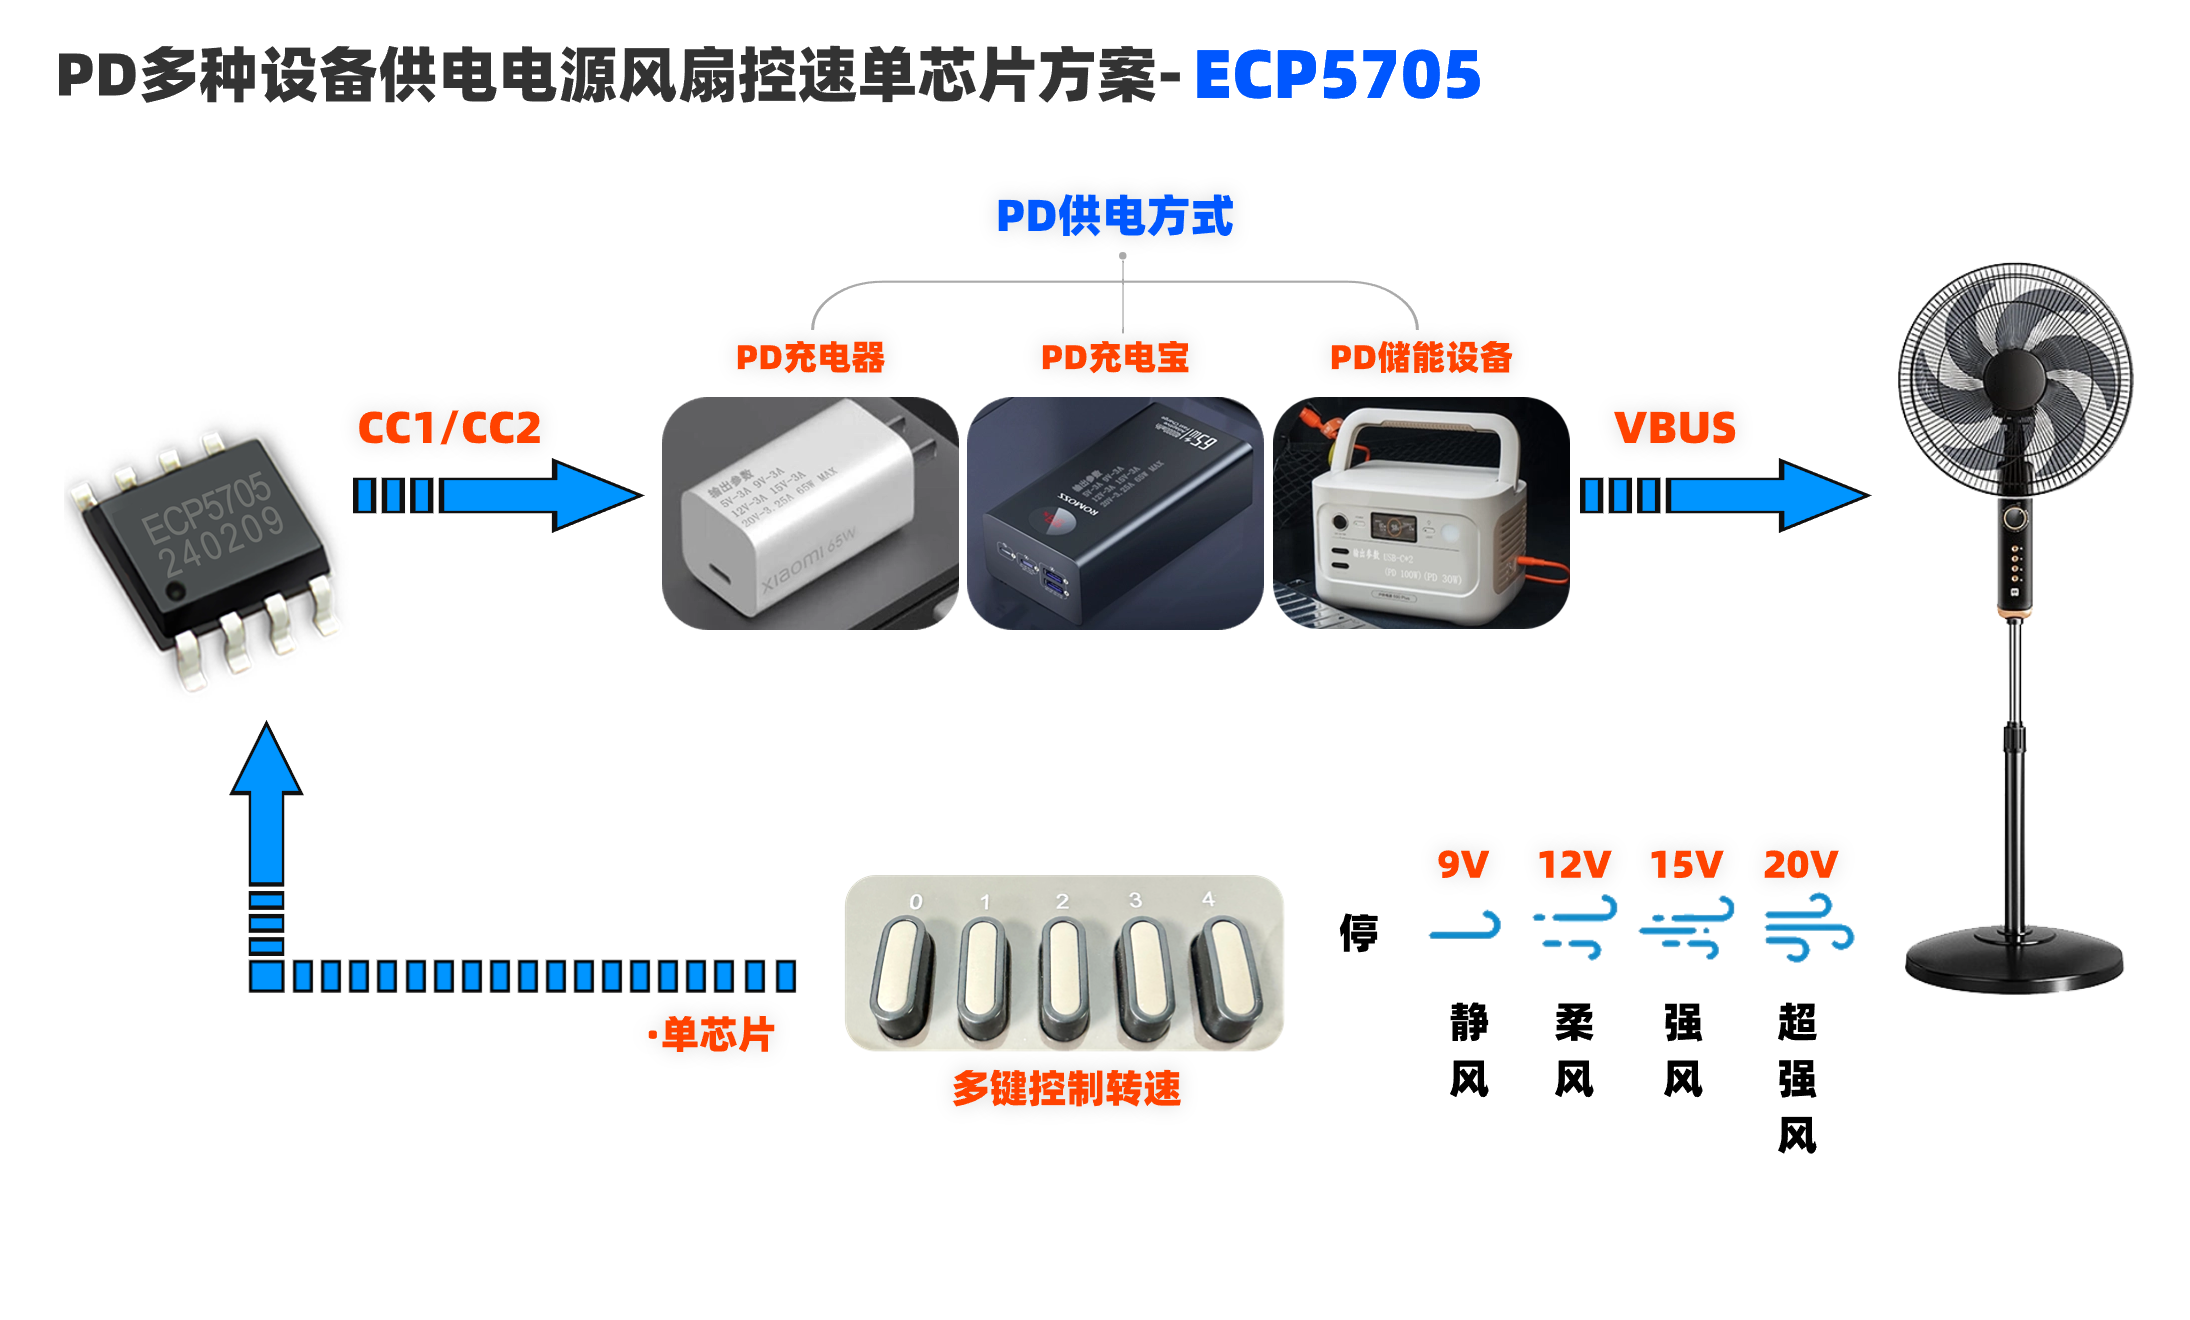 PD快充Type-C供电Sink取电芯片ECP5705，适用于PD风扇方案，单芯片完成风速档位的自由切换